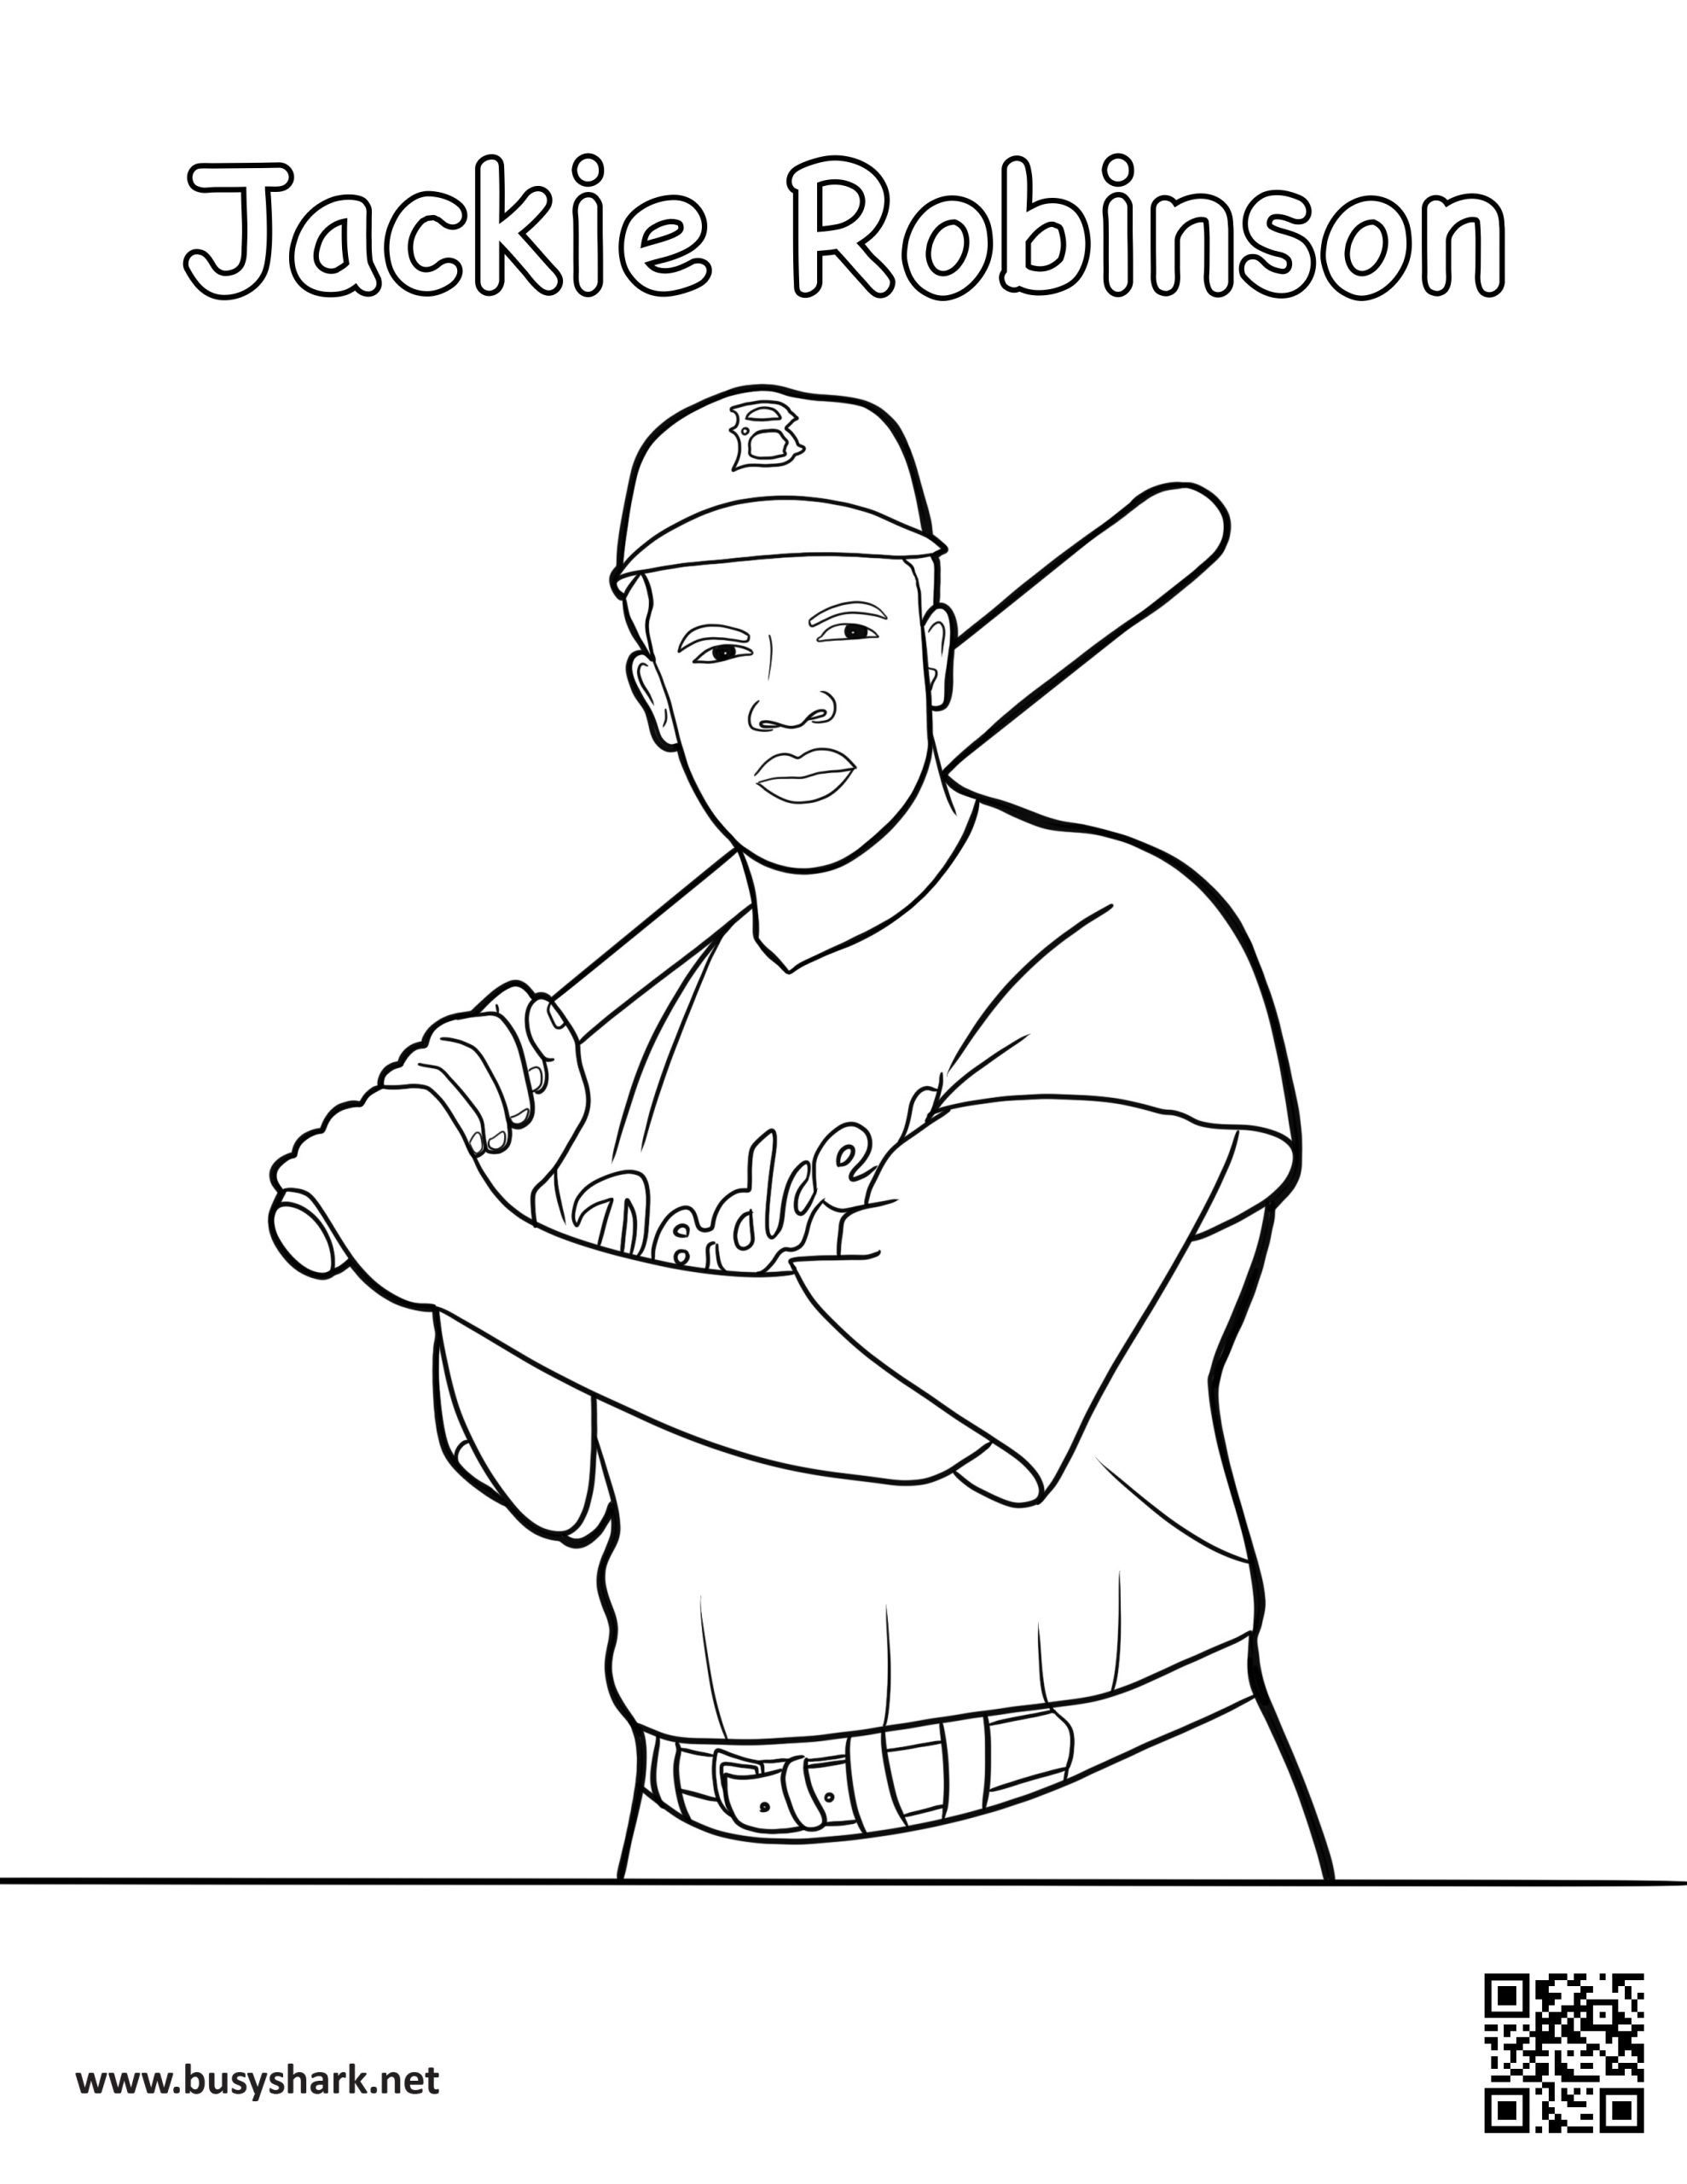 Jackie robinson coloring page free printable